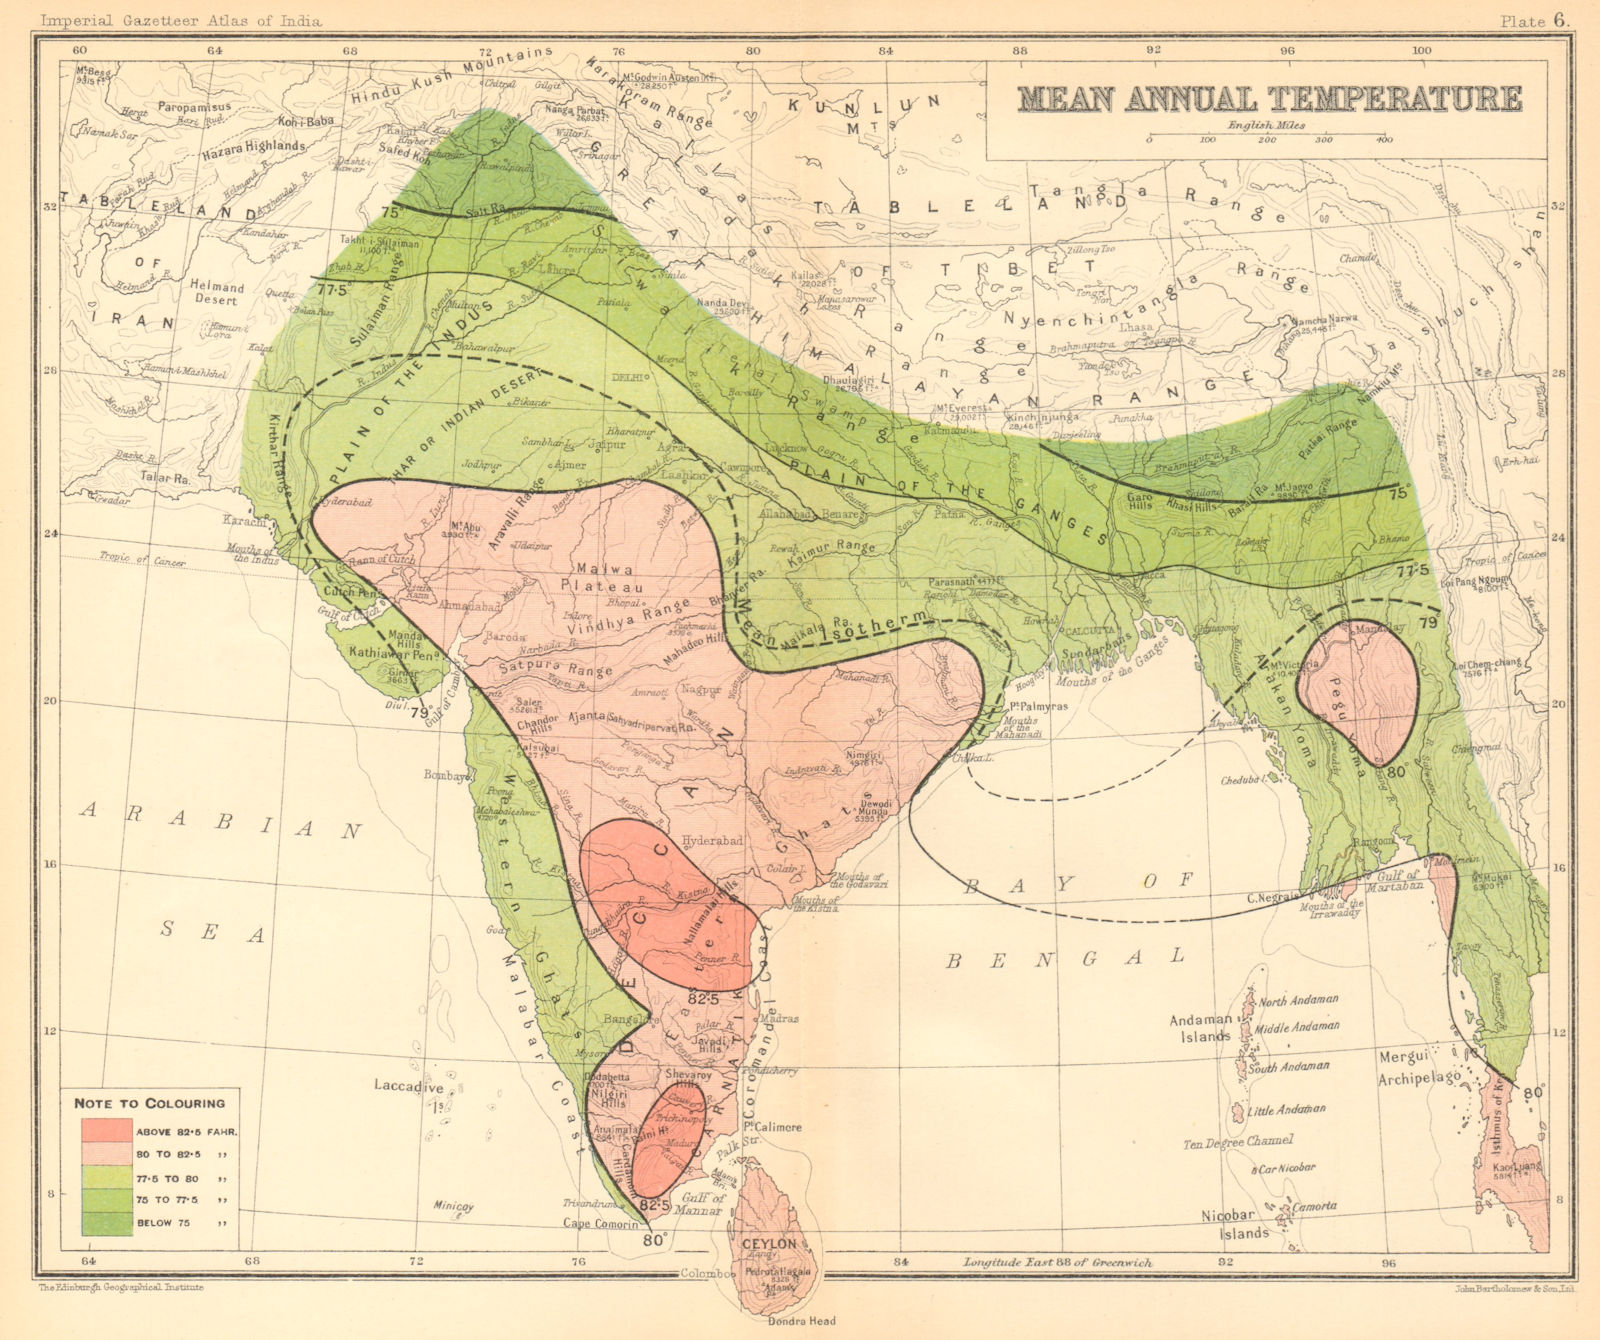 SOUTH ASIA. British India & Burma. Mean Annual Temperature 1931 old map